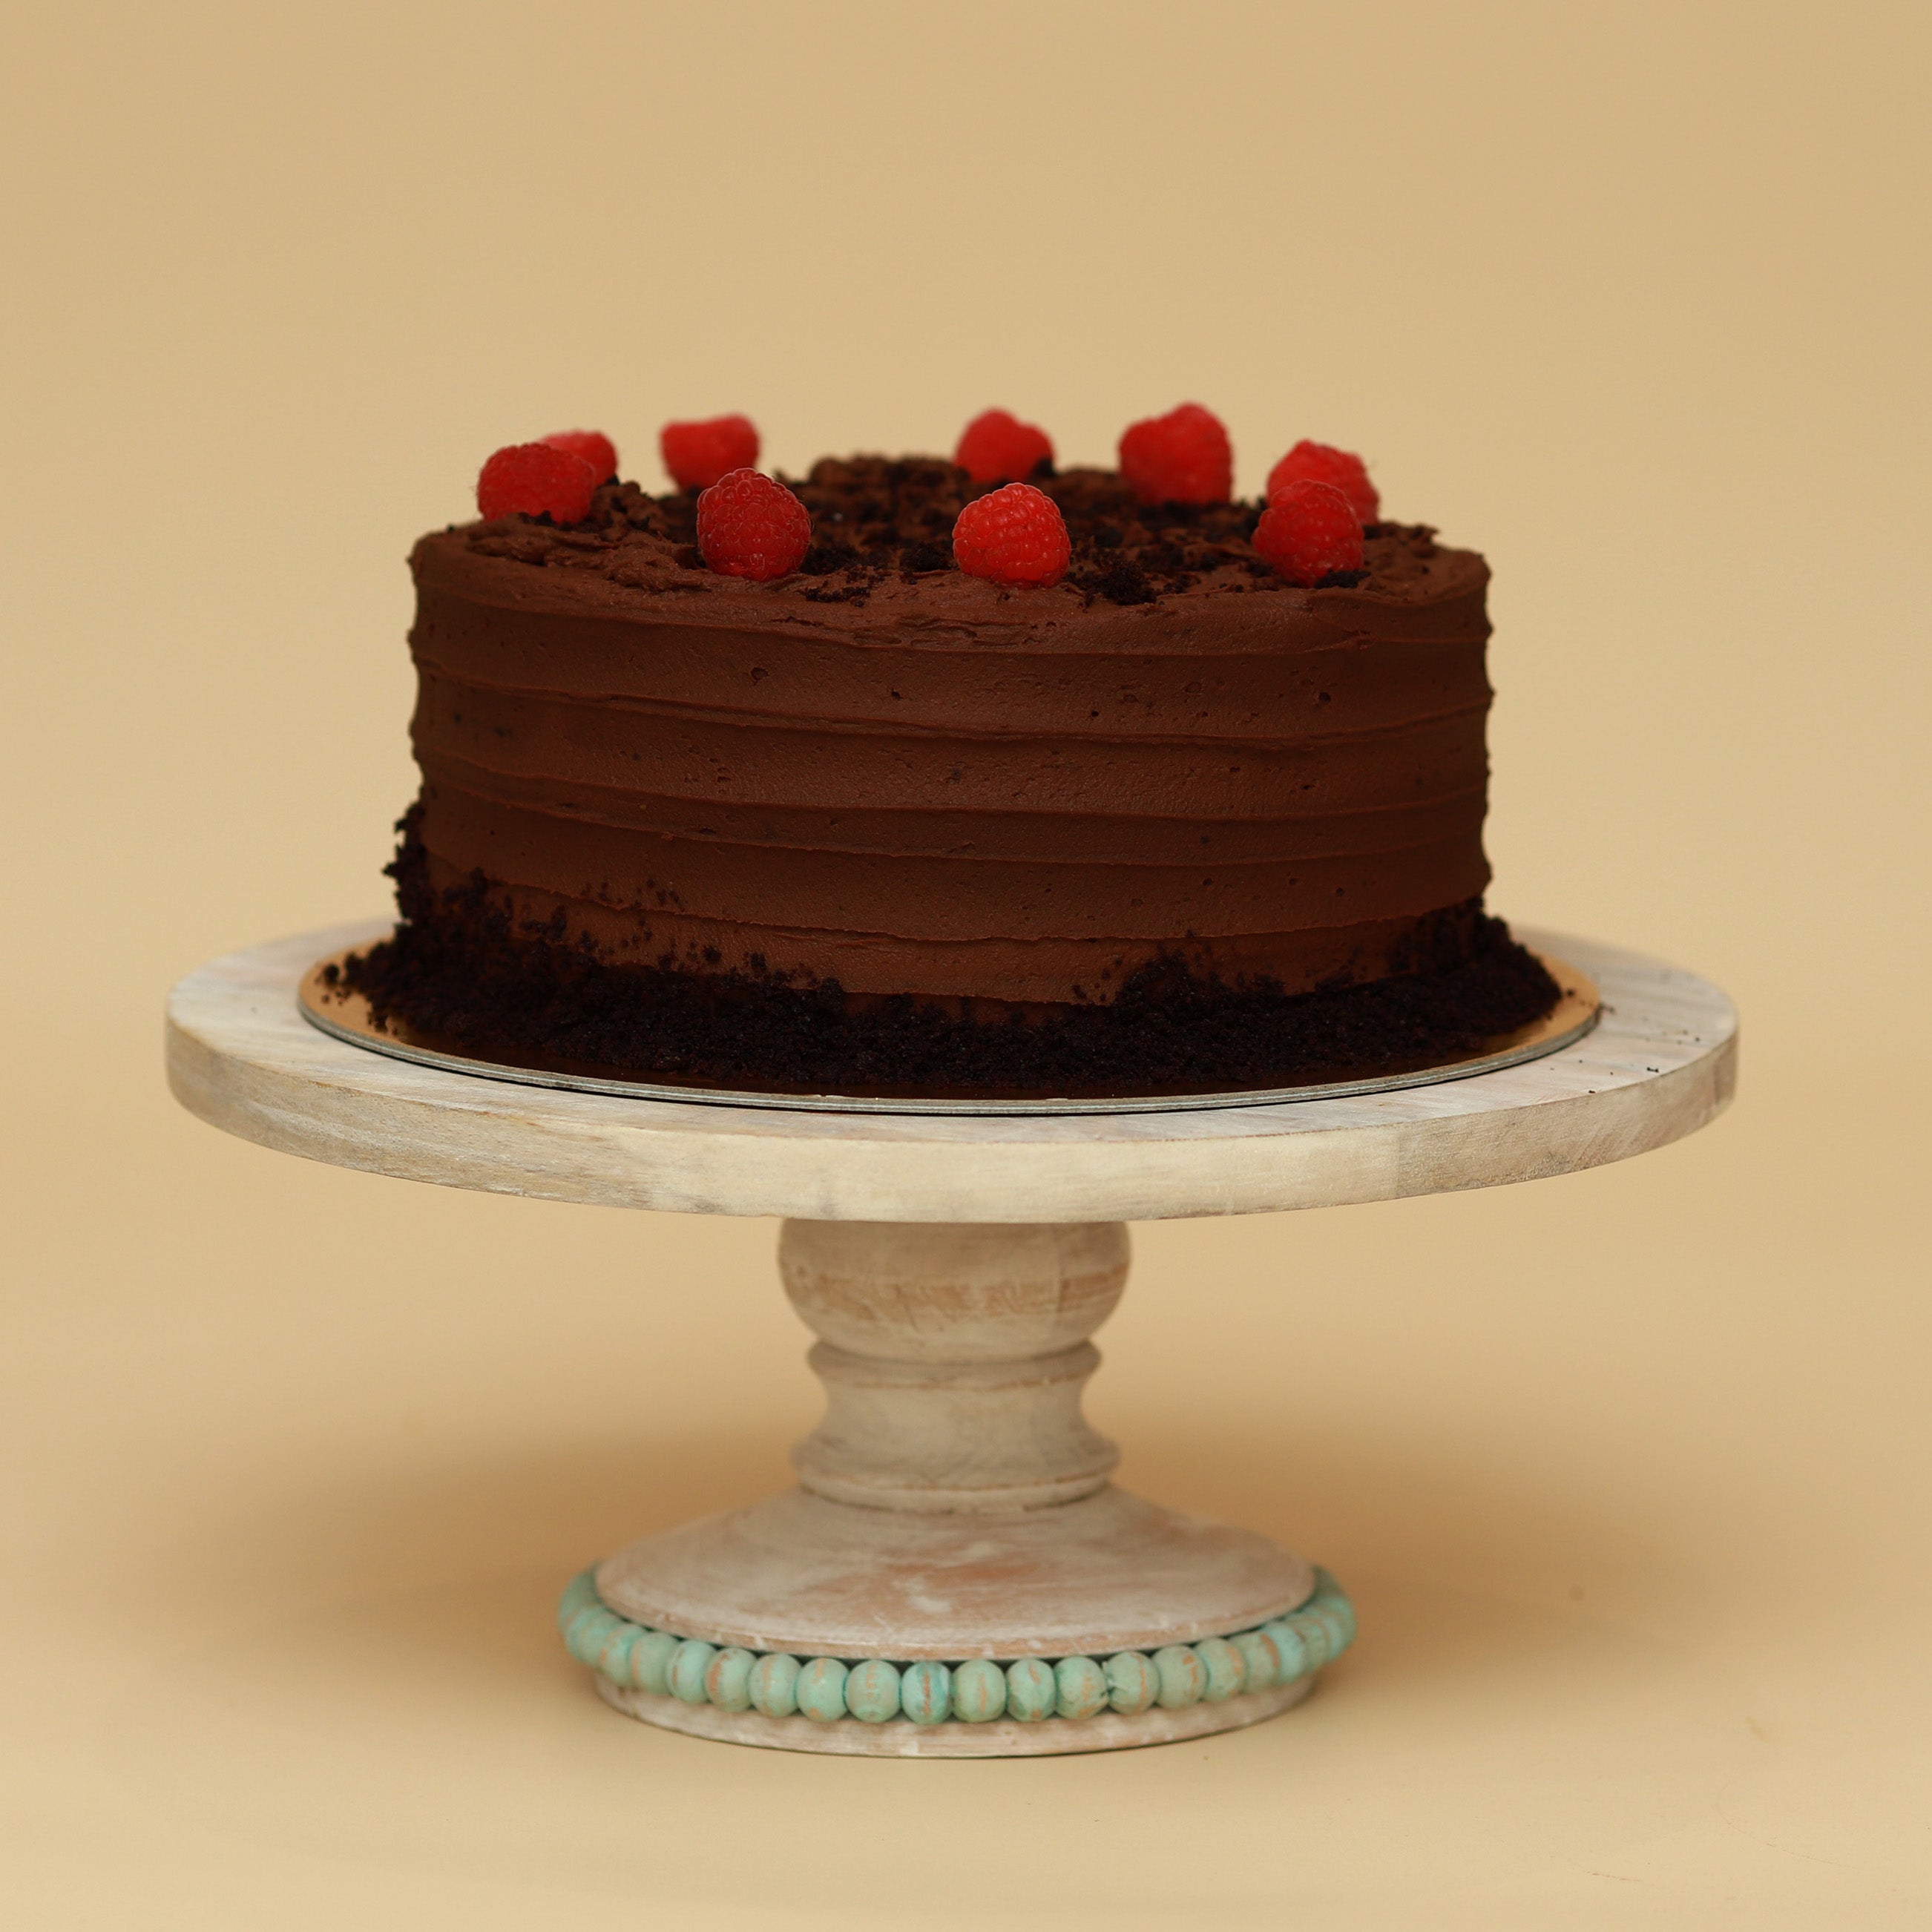 Ganache-Topped Chocolate Cake Recipe: How to Make It